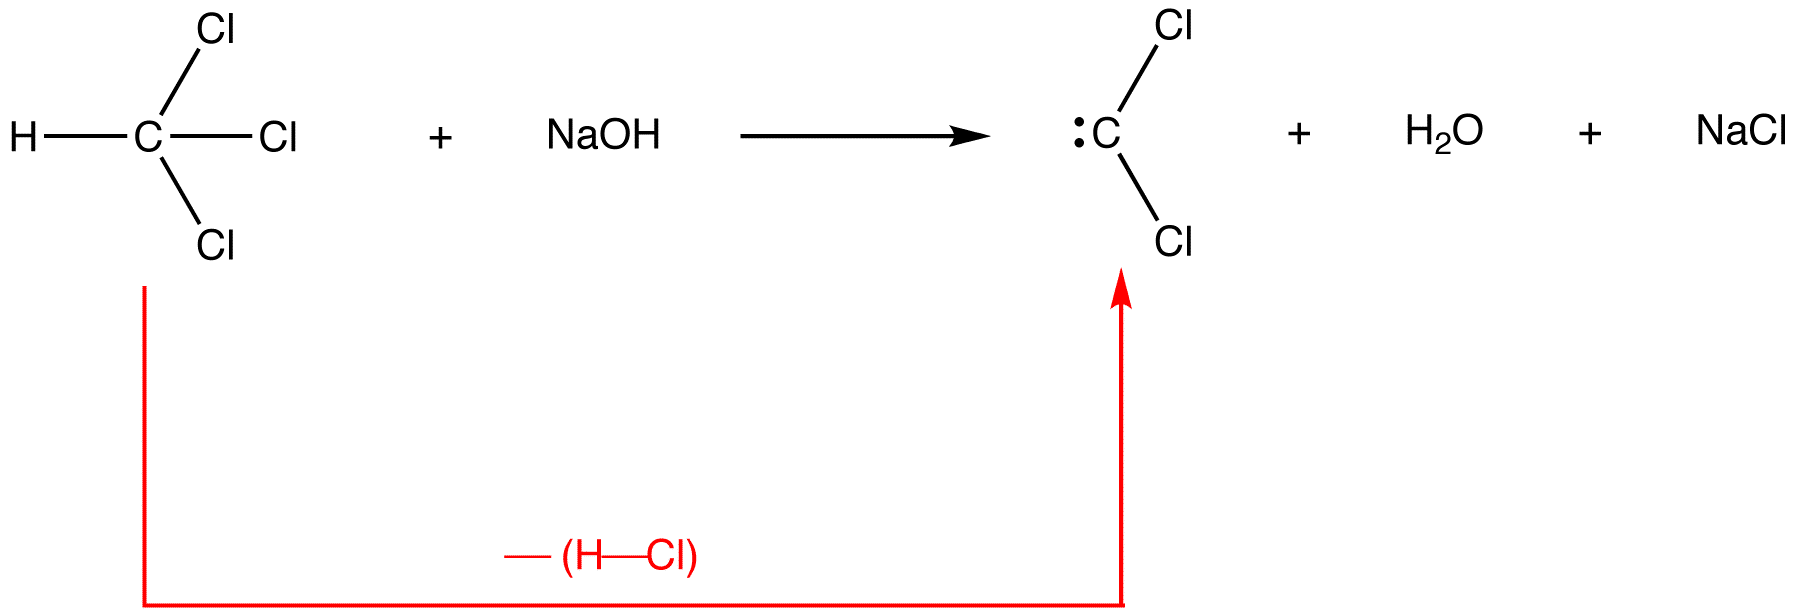 dehydrohalgenation2.png